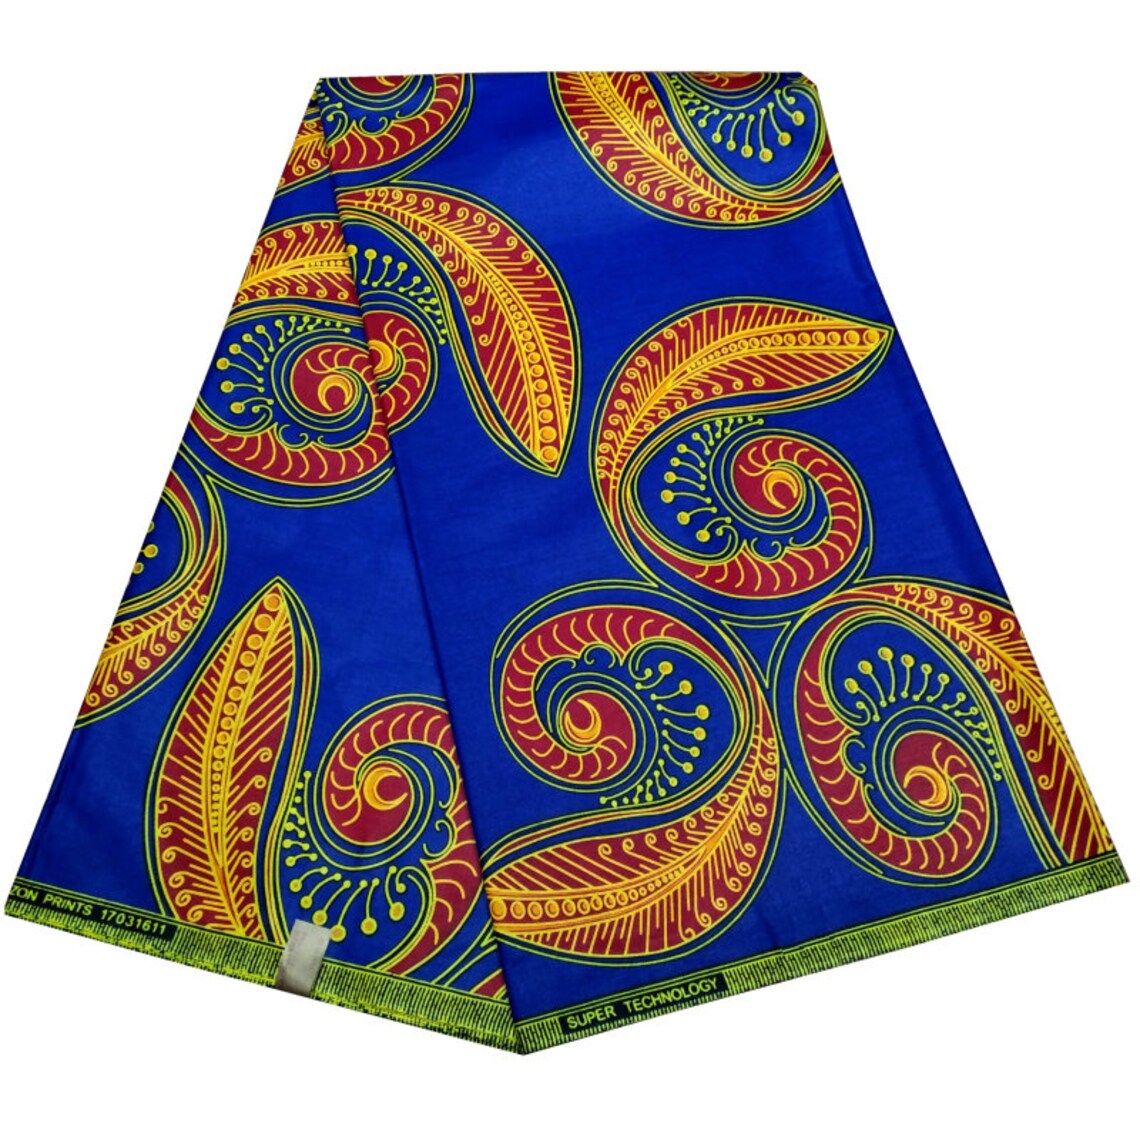 Brilliant Blue Ankara African prints batik fabric real wax | Etsy